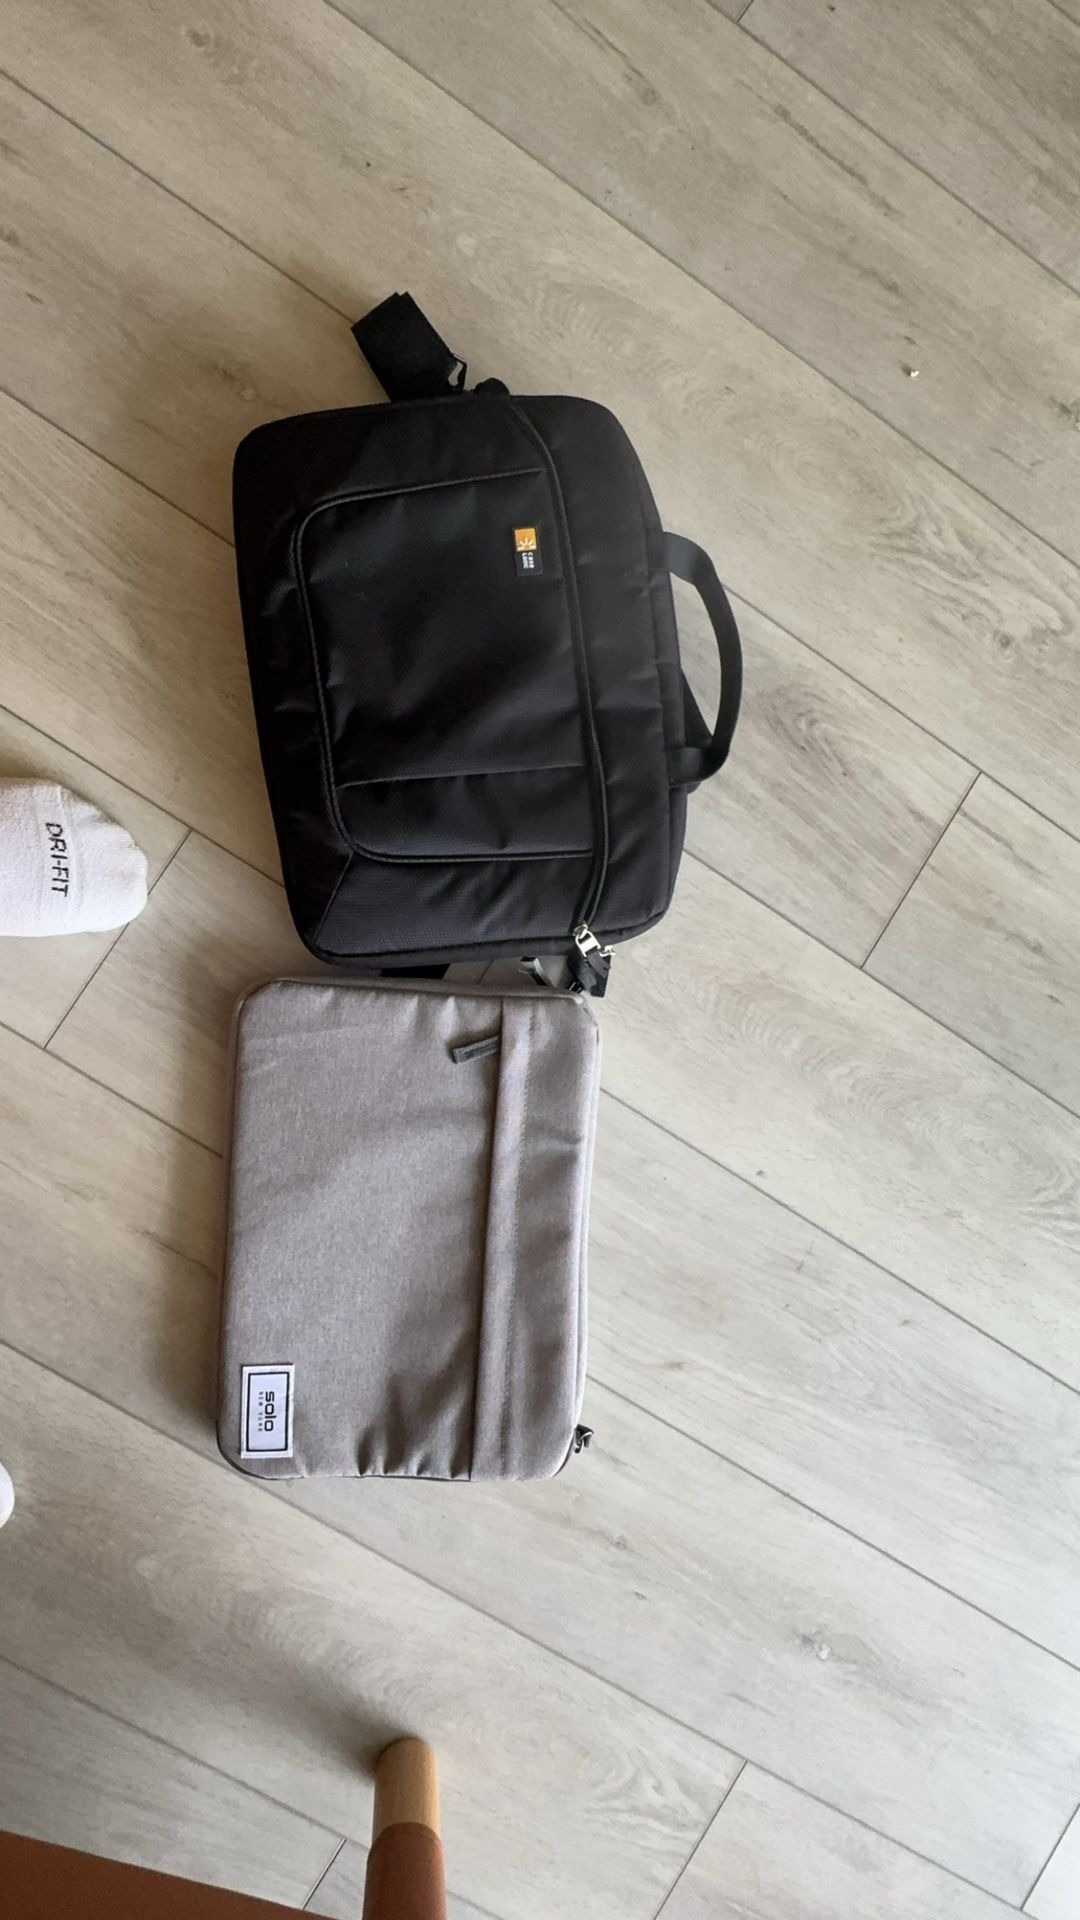 laptop bag and laptop sleeve bundle 